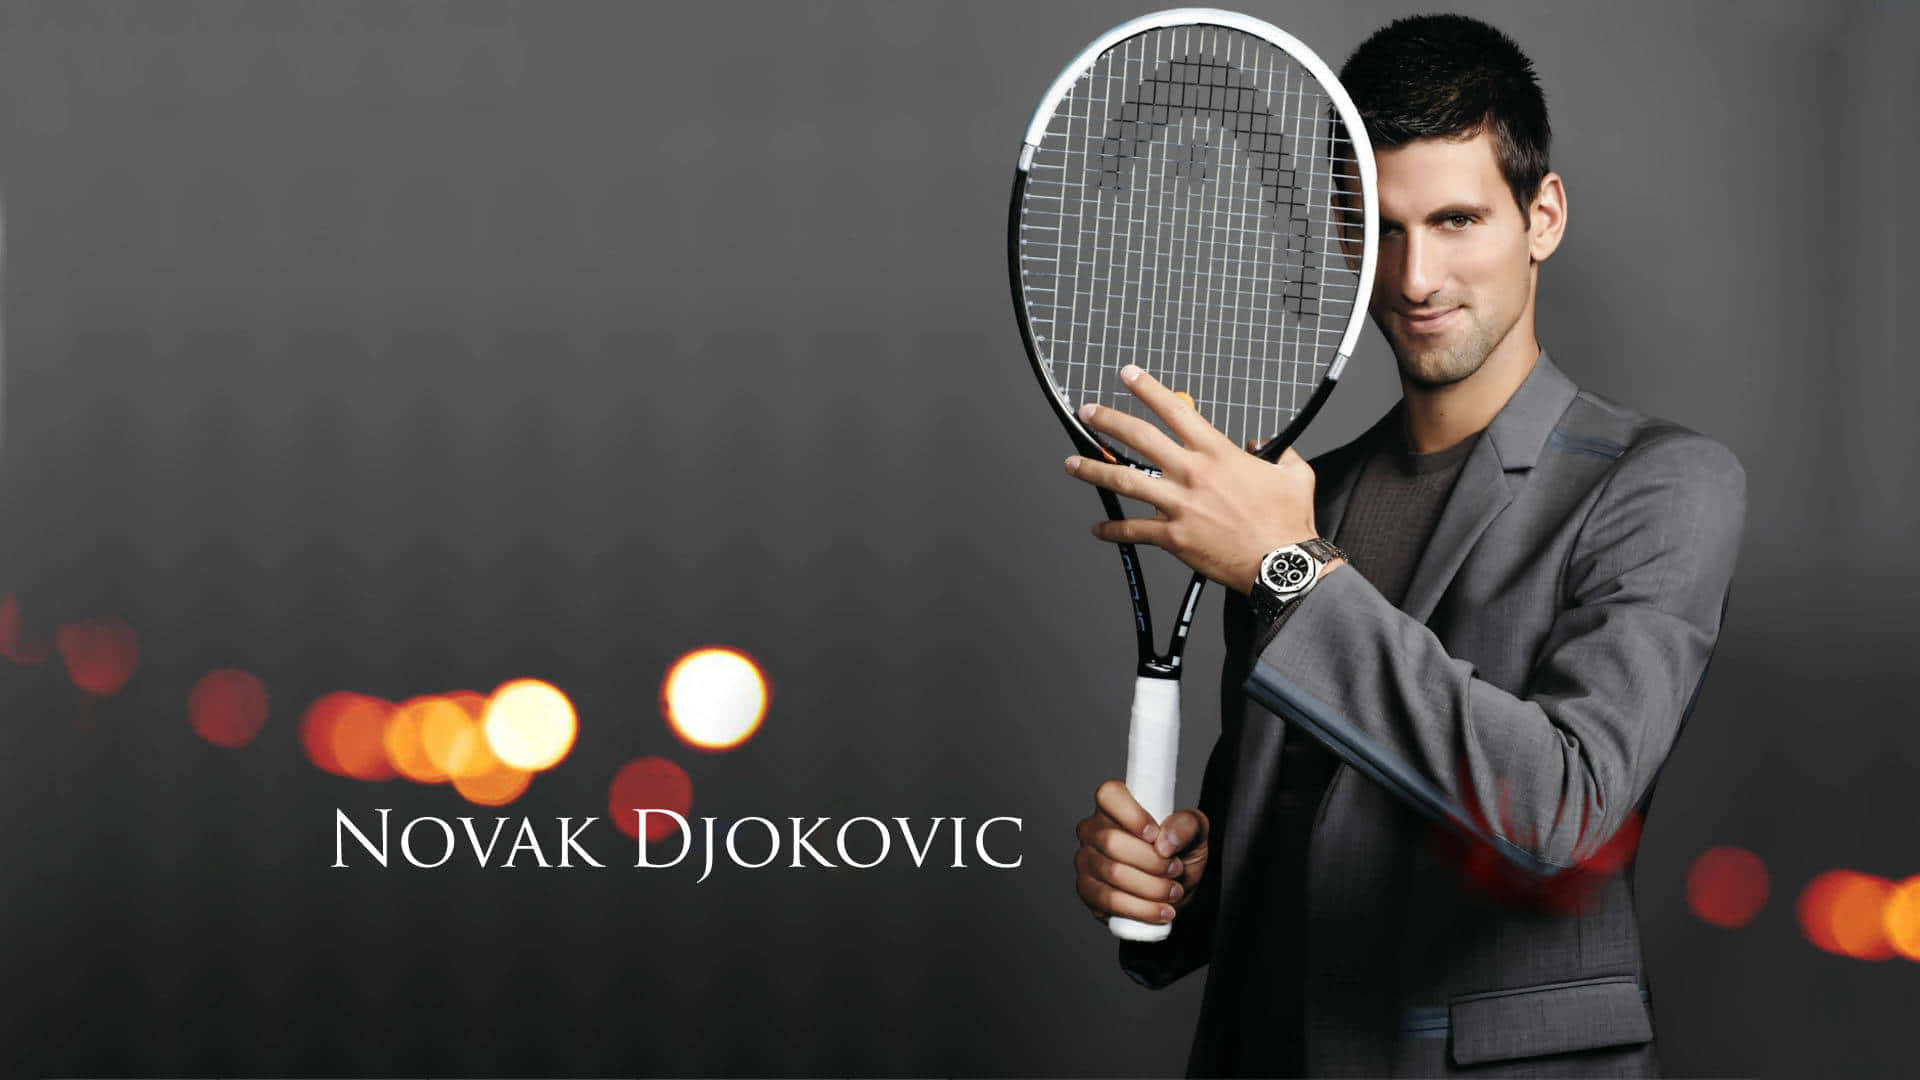 Hdserbisk-tennisspelare Novak Djokovic-poster Som Bakgrund.